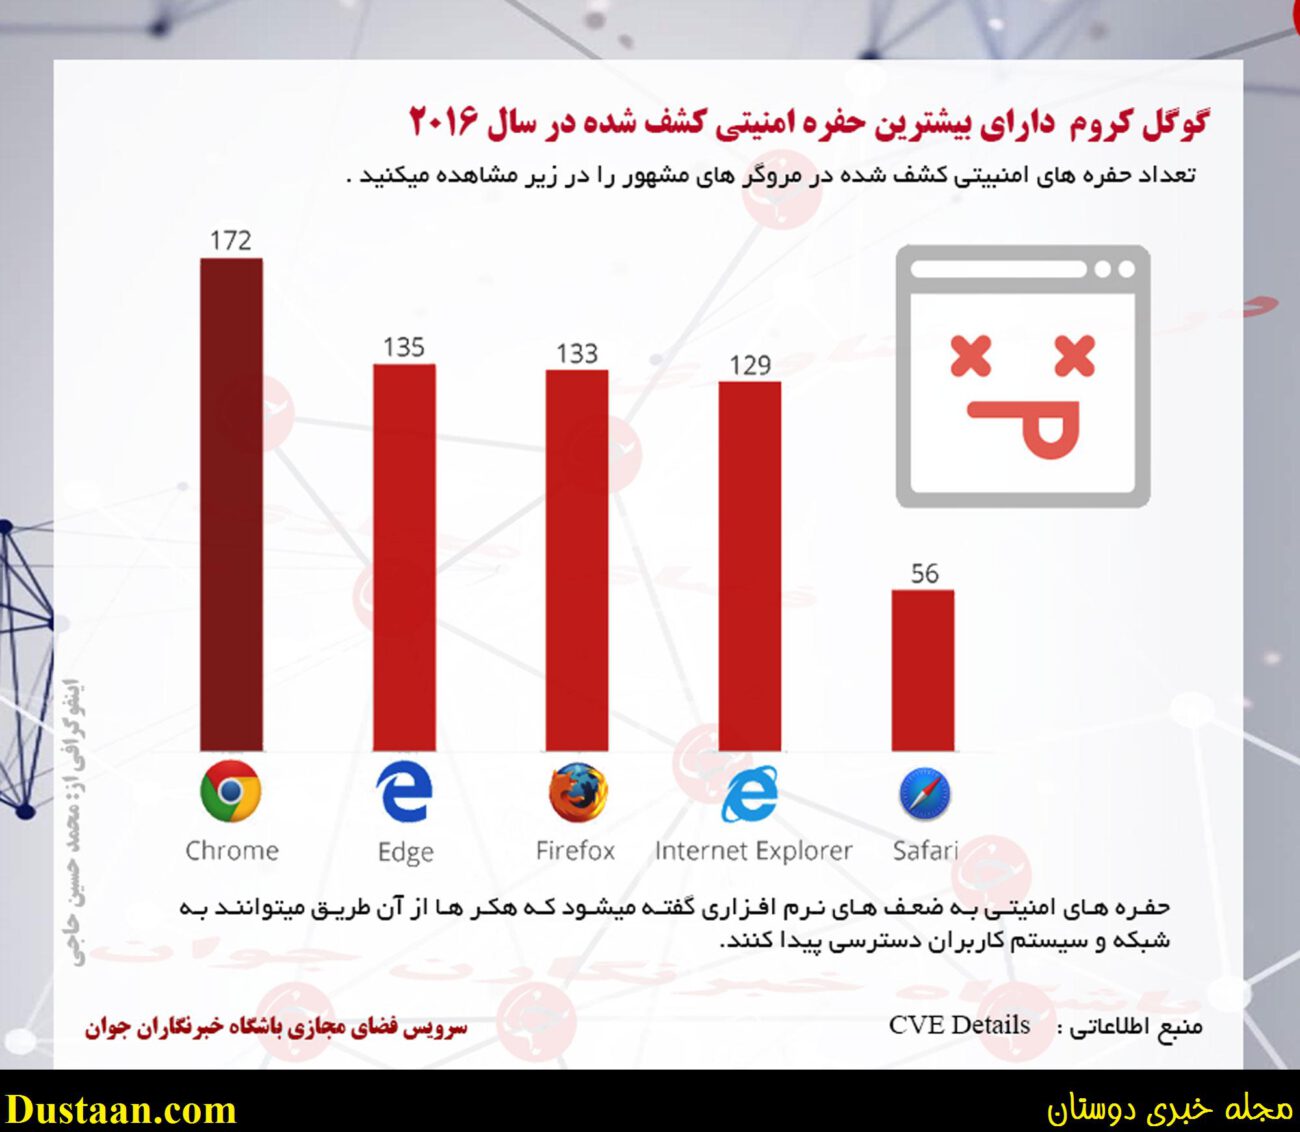 www.dustaan.com-امنیت کدام یک از مرورگر های اینترنت پایین است؟